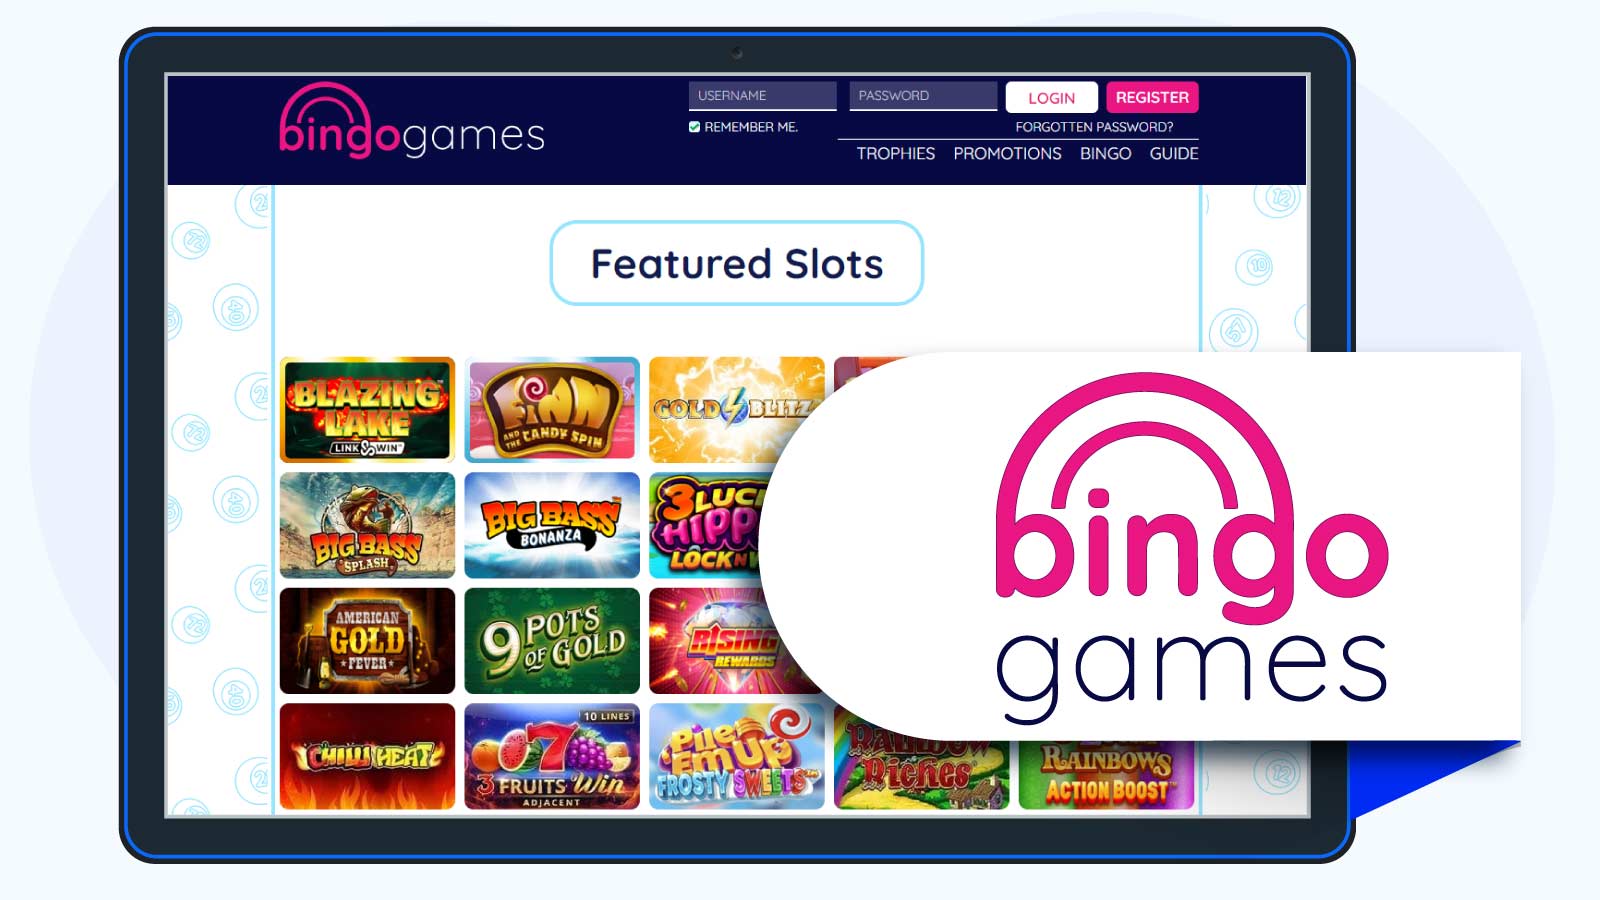 Bingo Games Casino – Top Bingo Destination